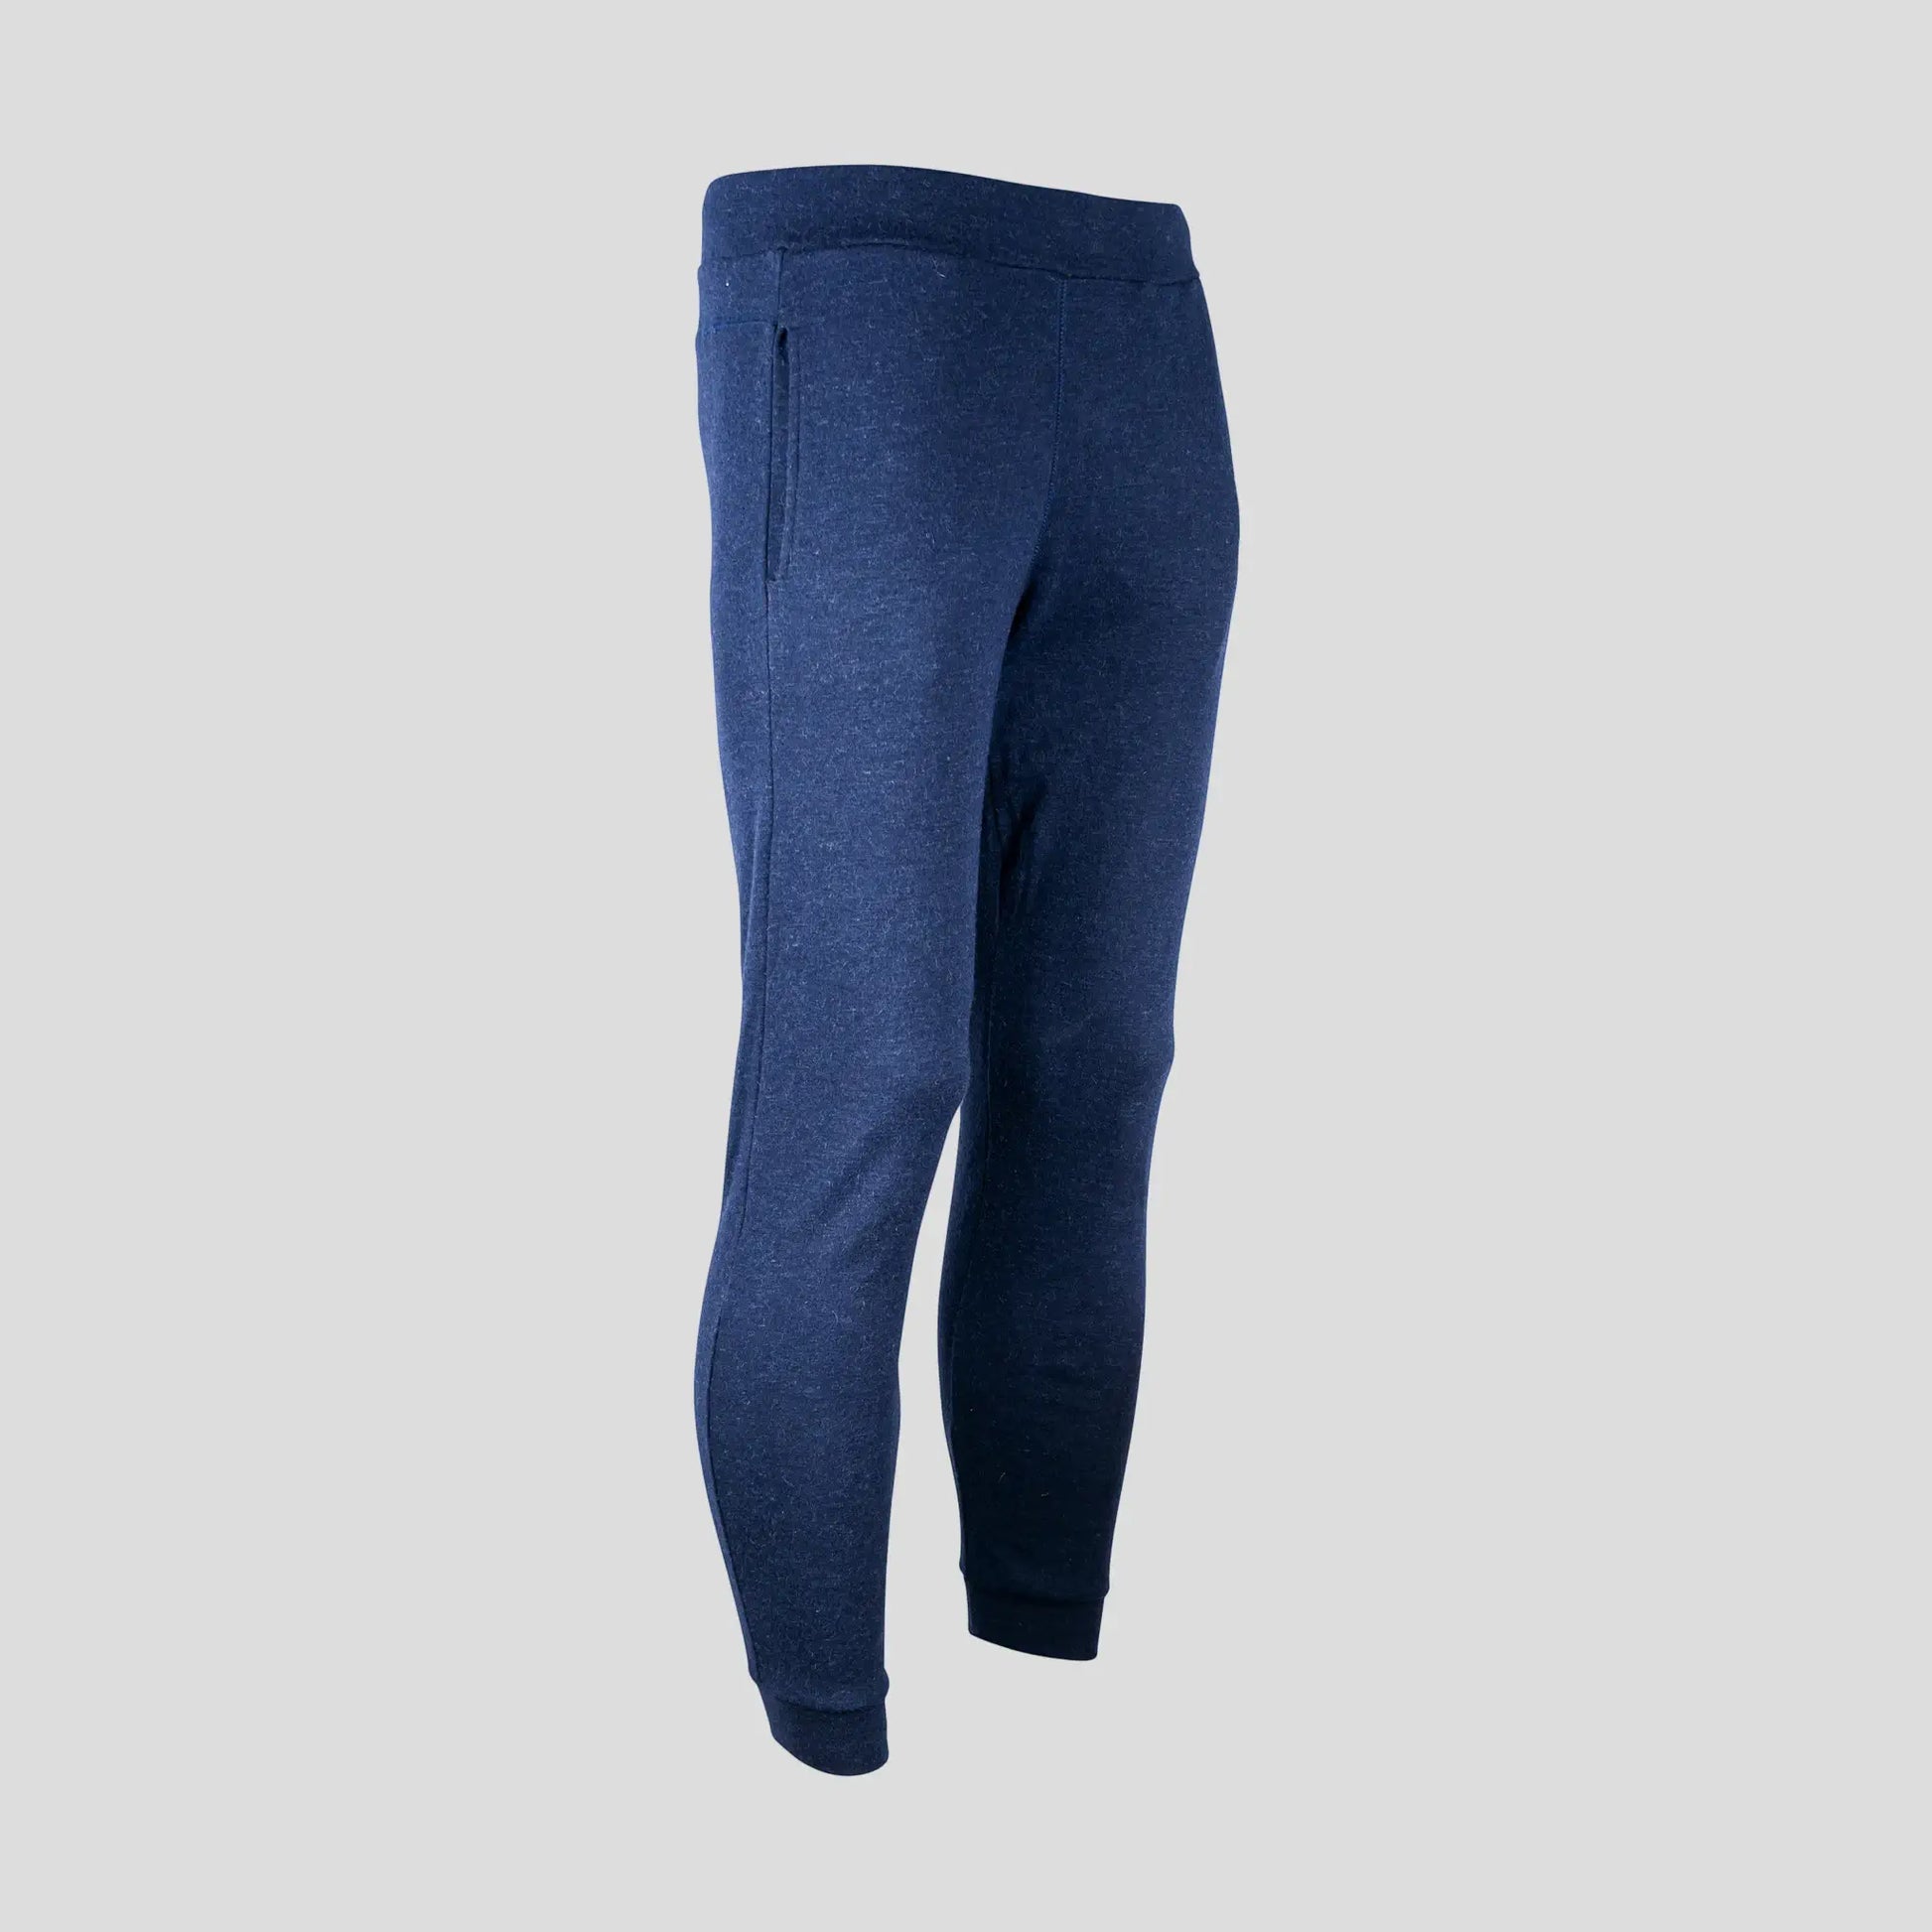 JustInTrend Flame Resistant Sweatpants Navy Blue / 2XL